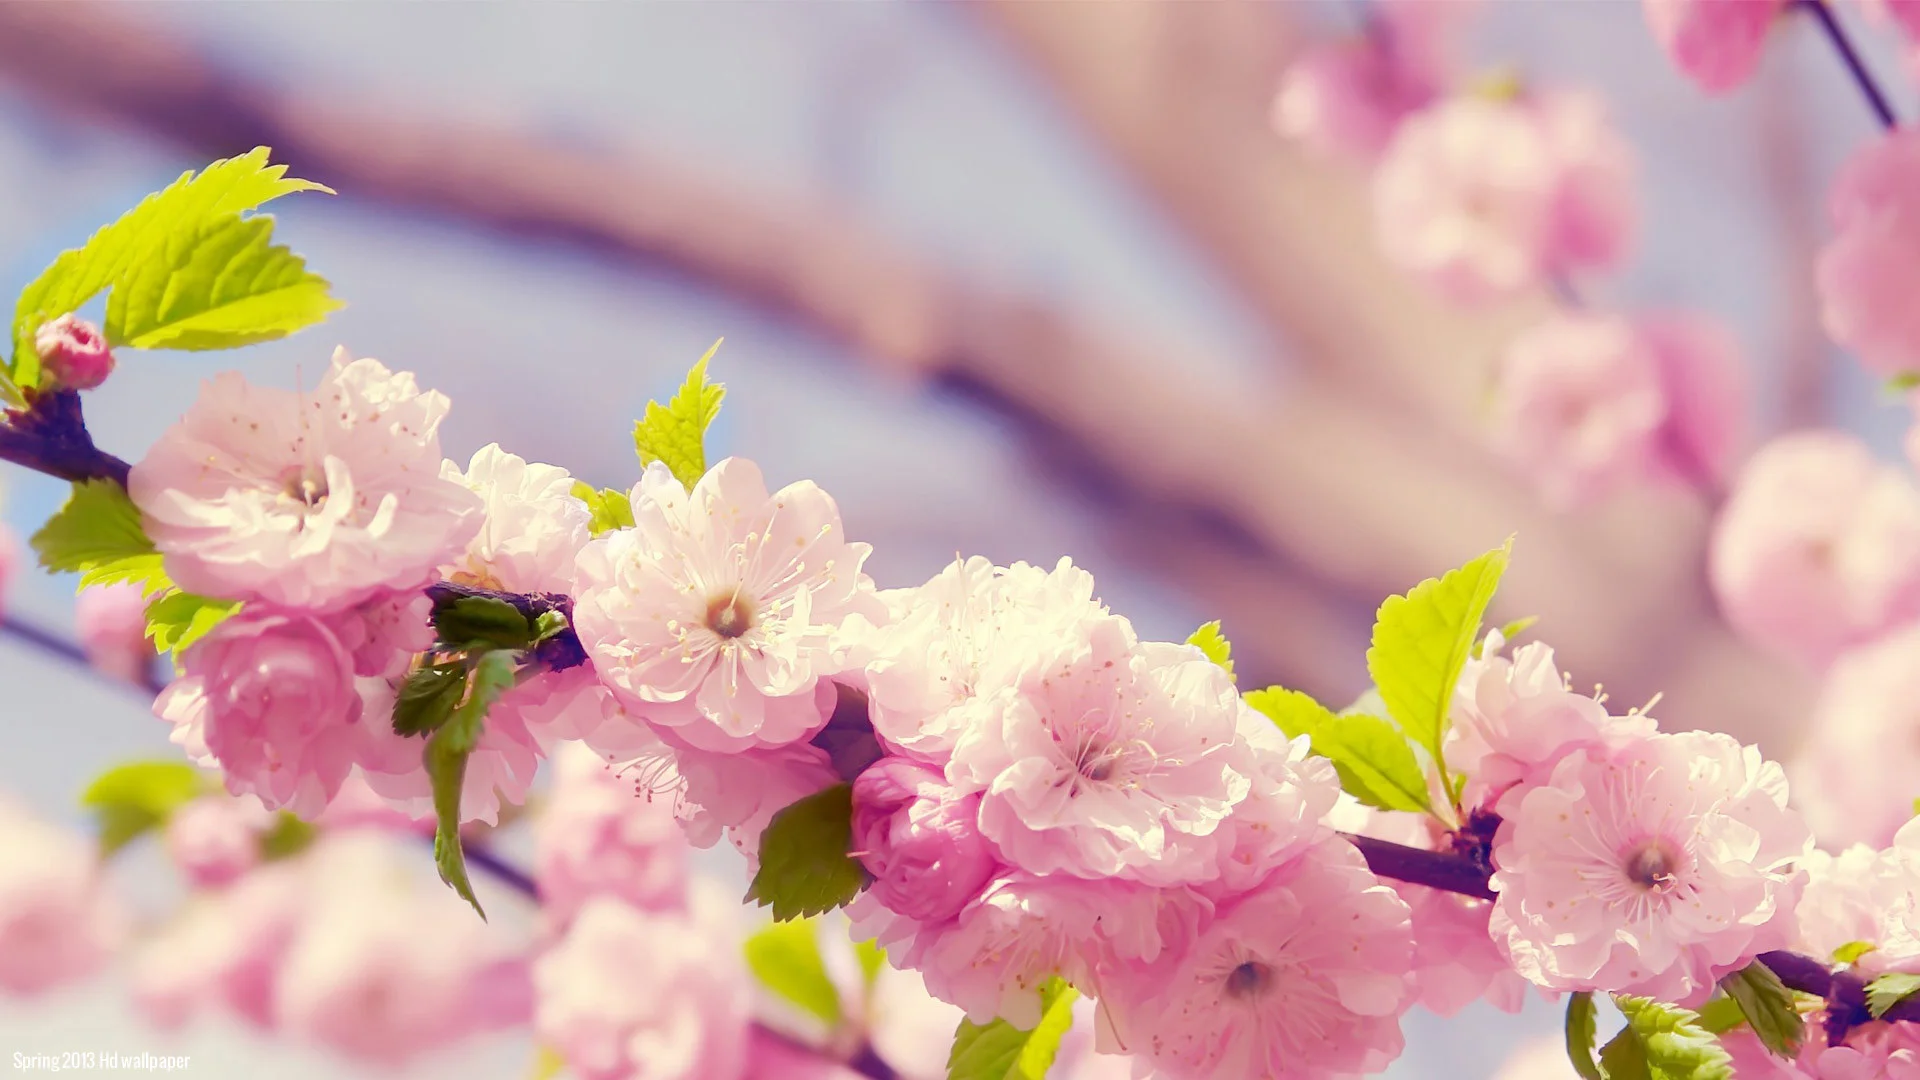 The 25 best Spring flowers wallpaper ideas on Pinterest Golden retriever labrador, Puppy flowers and Cute puppy pics